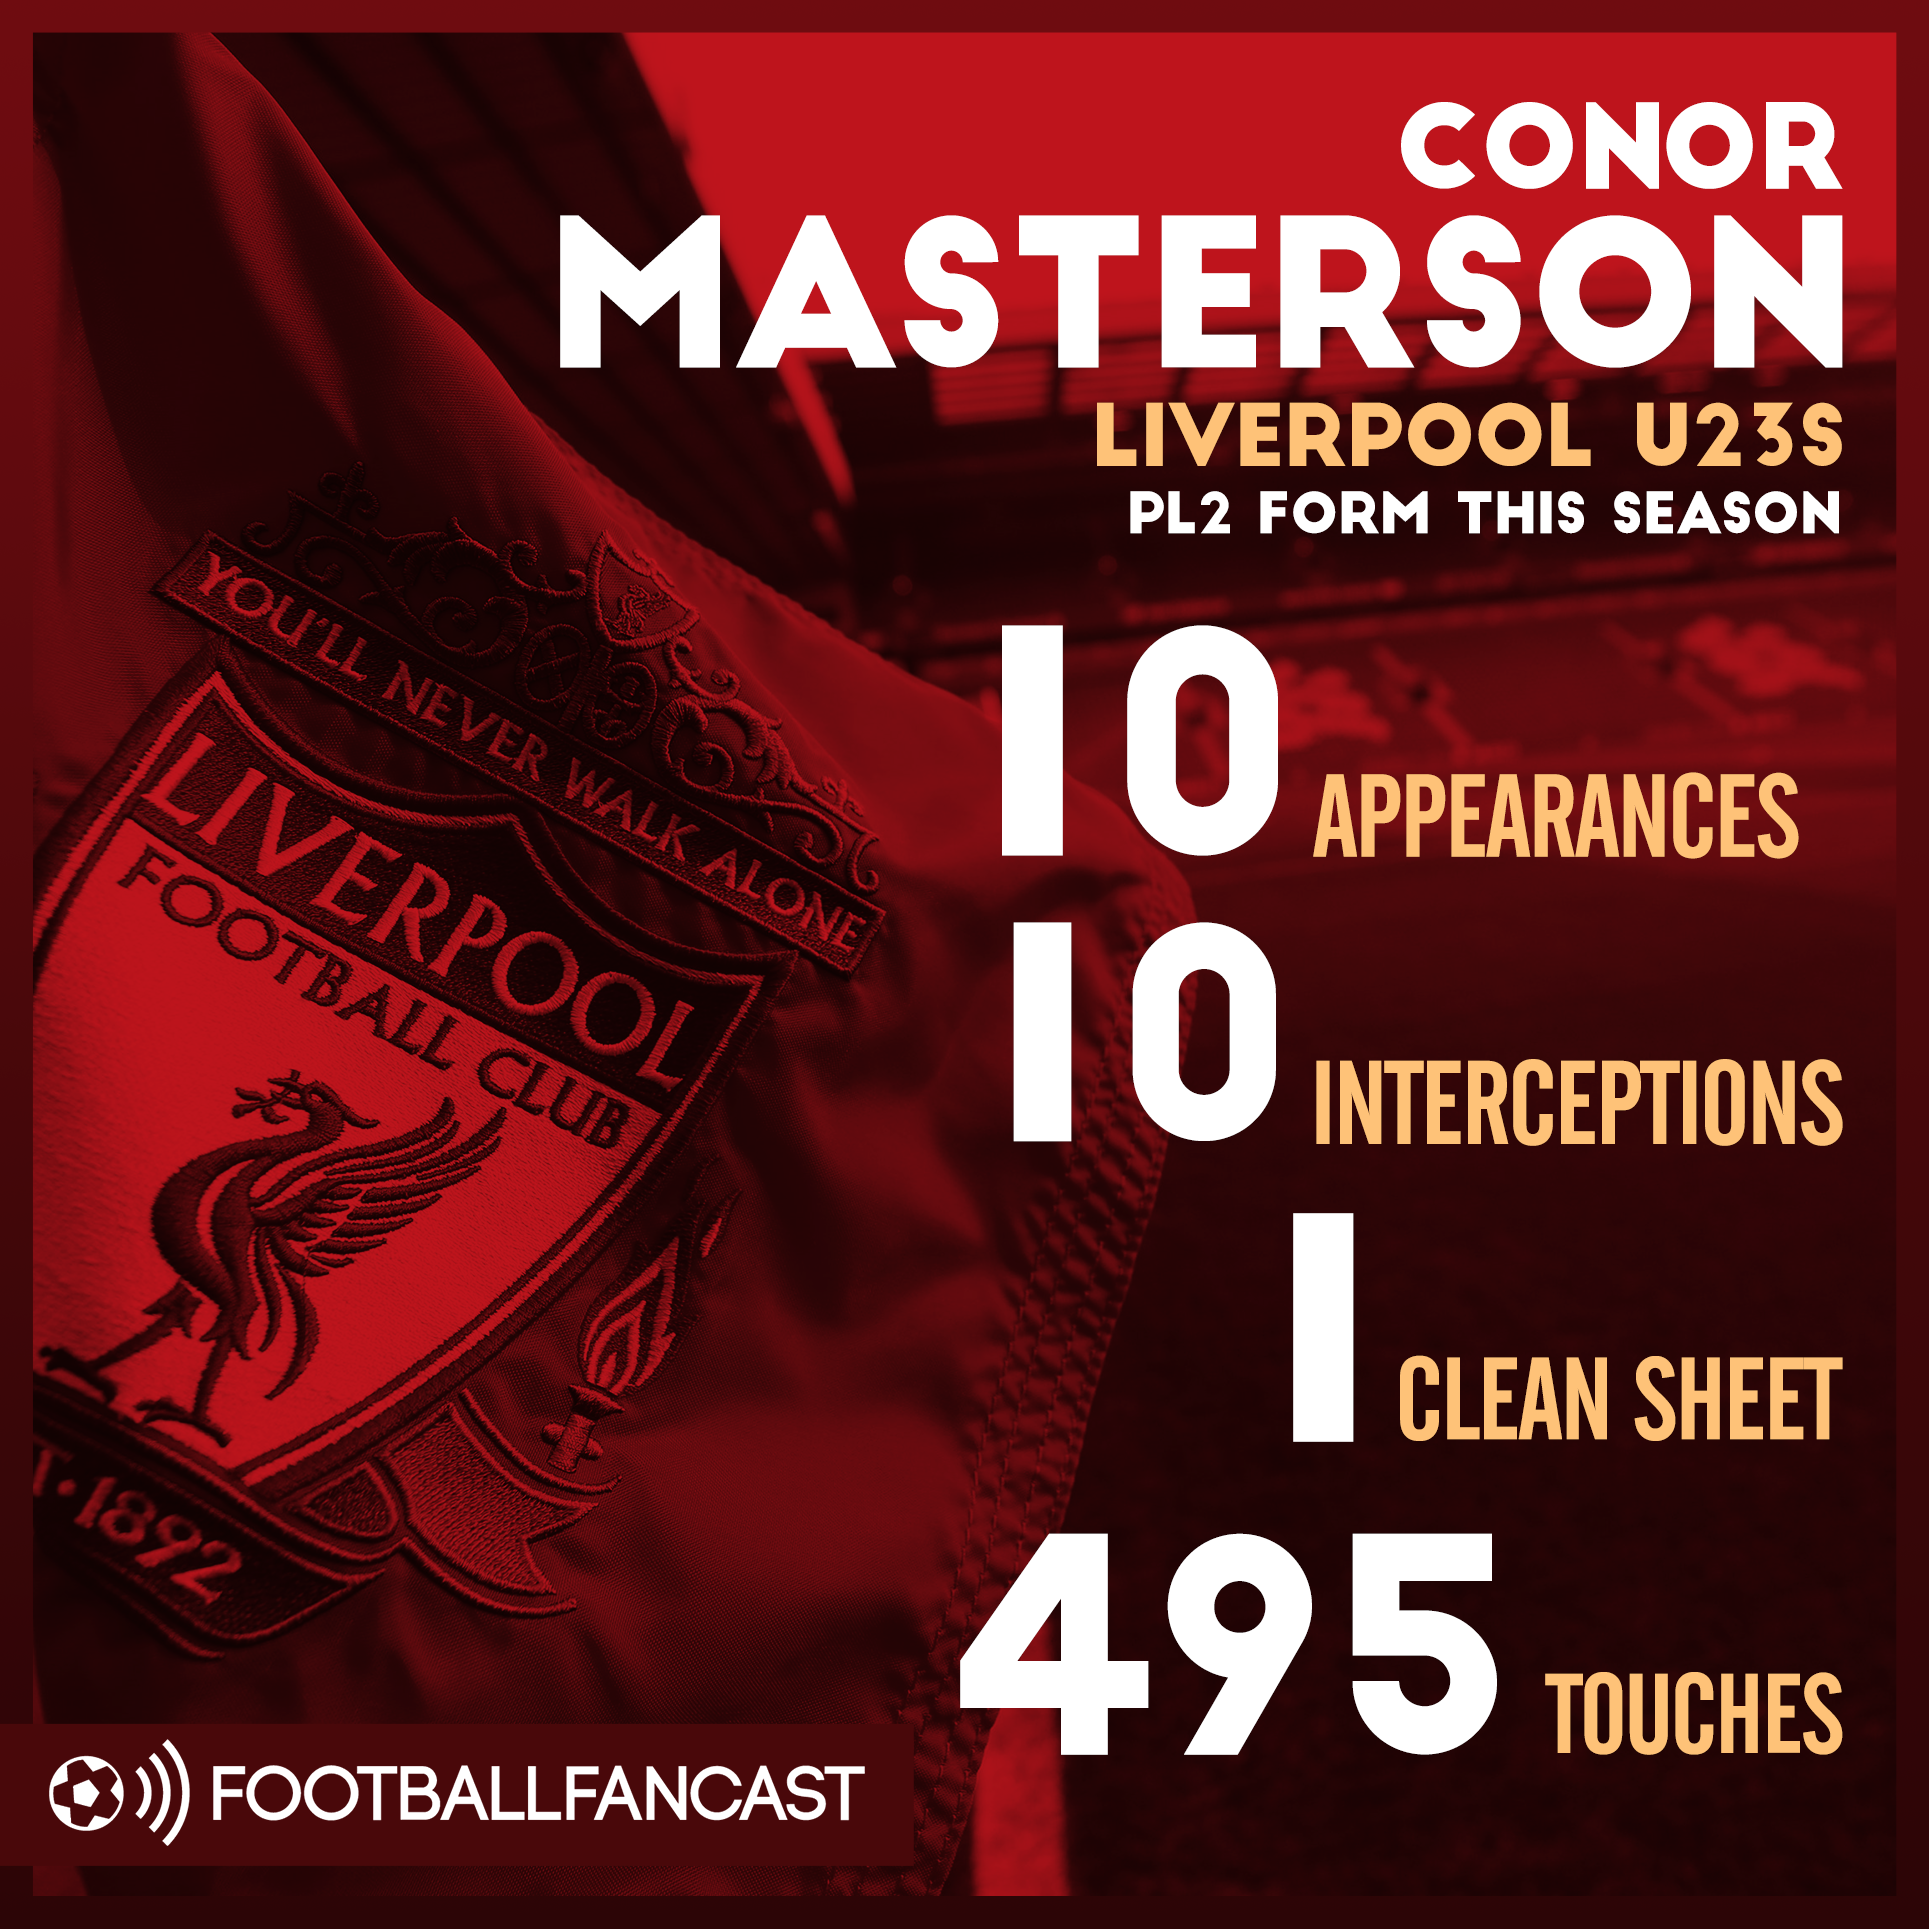 Conor Masterson's PL2 stats for Liverpool